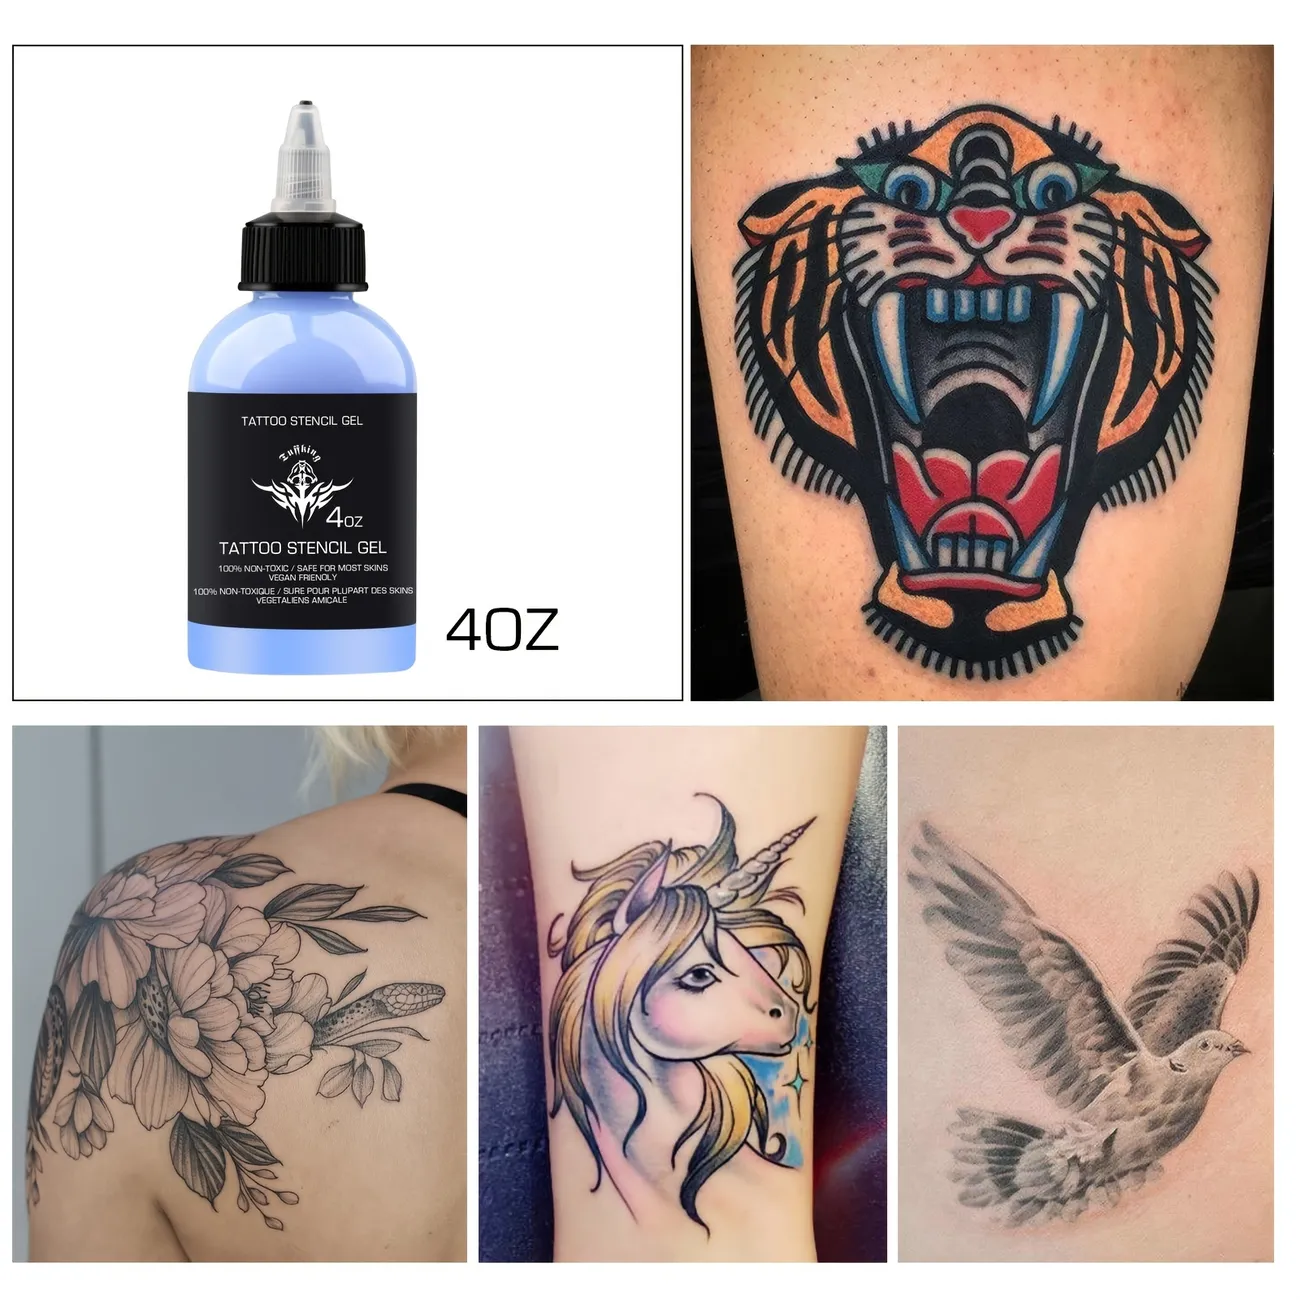 Tattoo Transfer Gel Tattoo Design Transfer Cream Gel Professional Stencil Primer Tattoo Skin Solution Gel For Tattoo Supplies Accessories